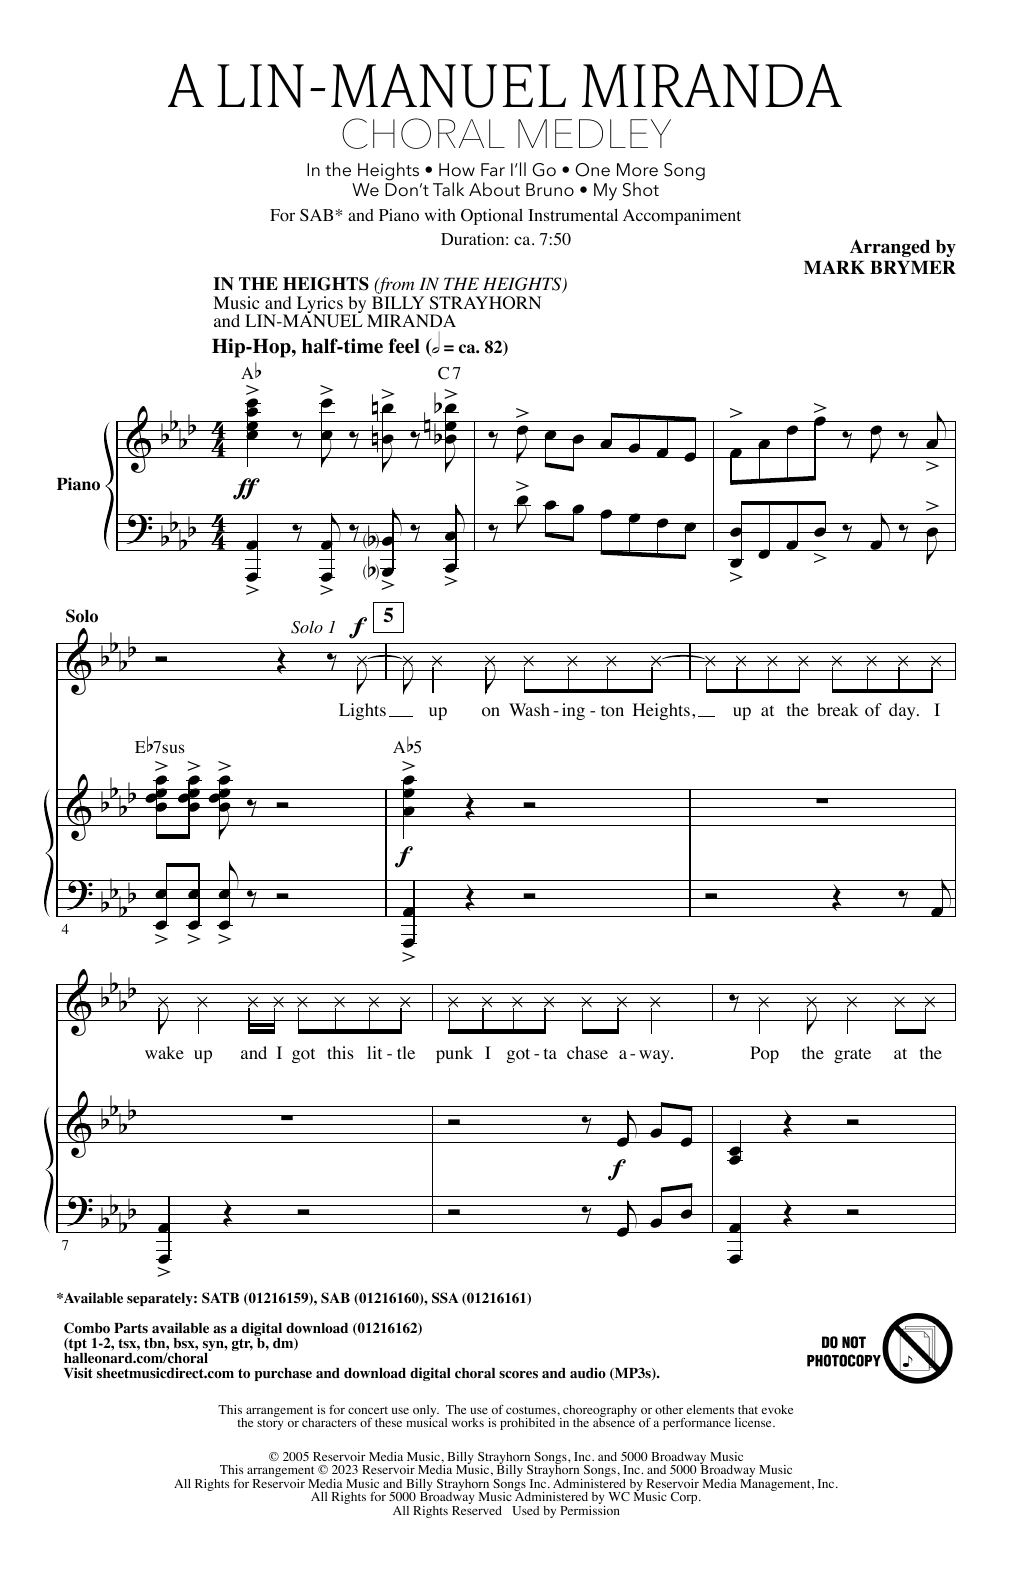 Lin-Manuel Miranda A Lin-Manuel Miranda Choral Medley (arr. Mark Brymer) Sheet Music Notes & Chords for SSA Choir - Download or Print PDF